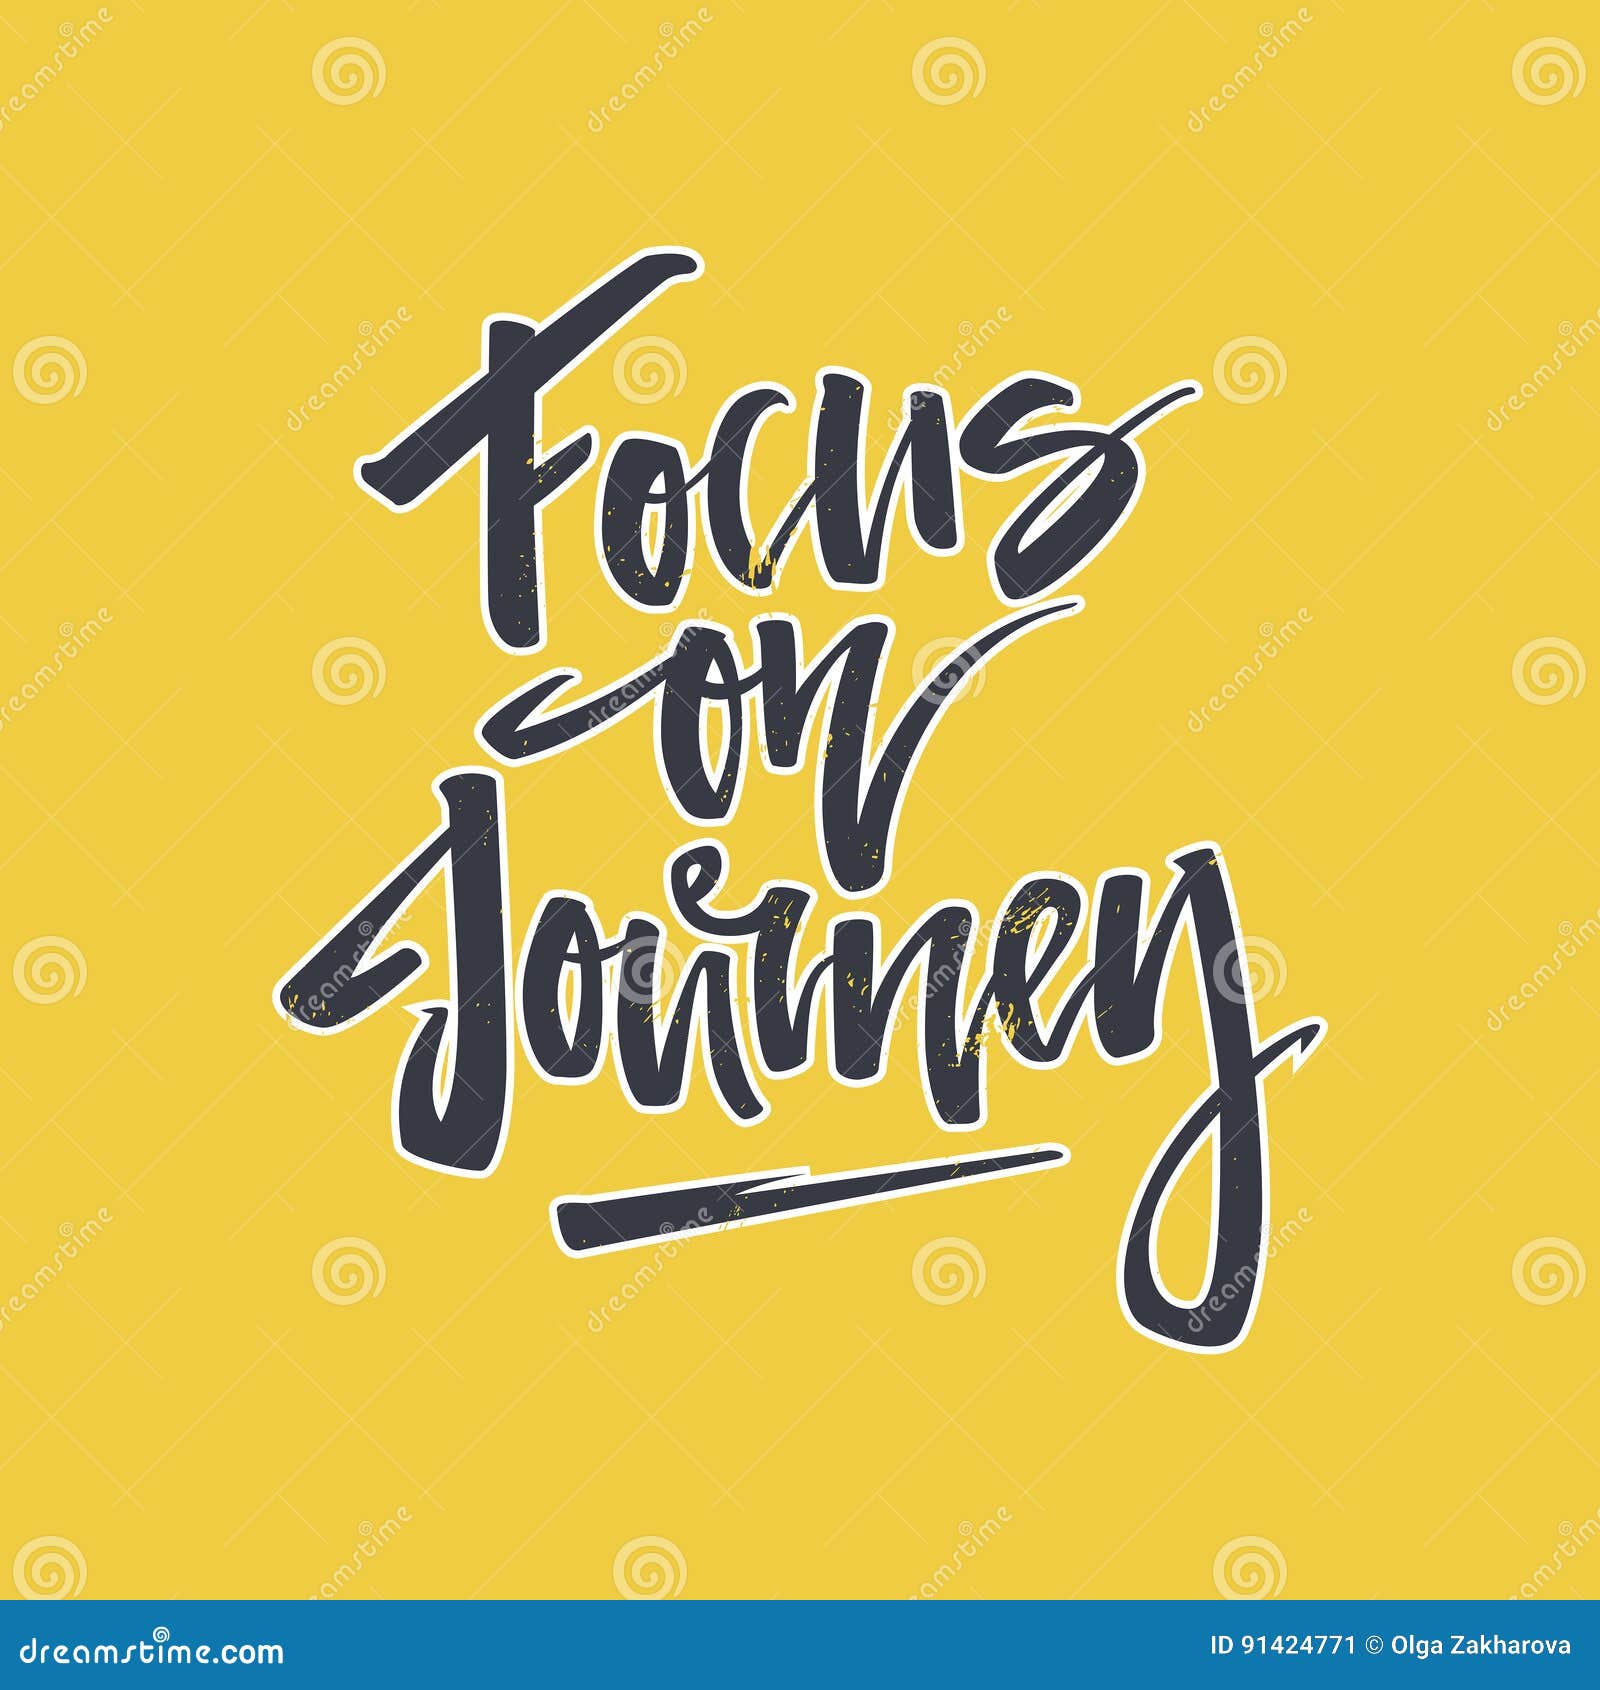 Focus on Journey Lettering stock vector. Illustration of lettering ...